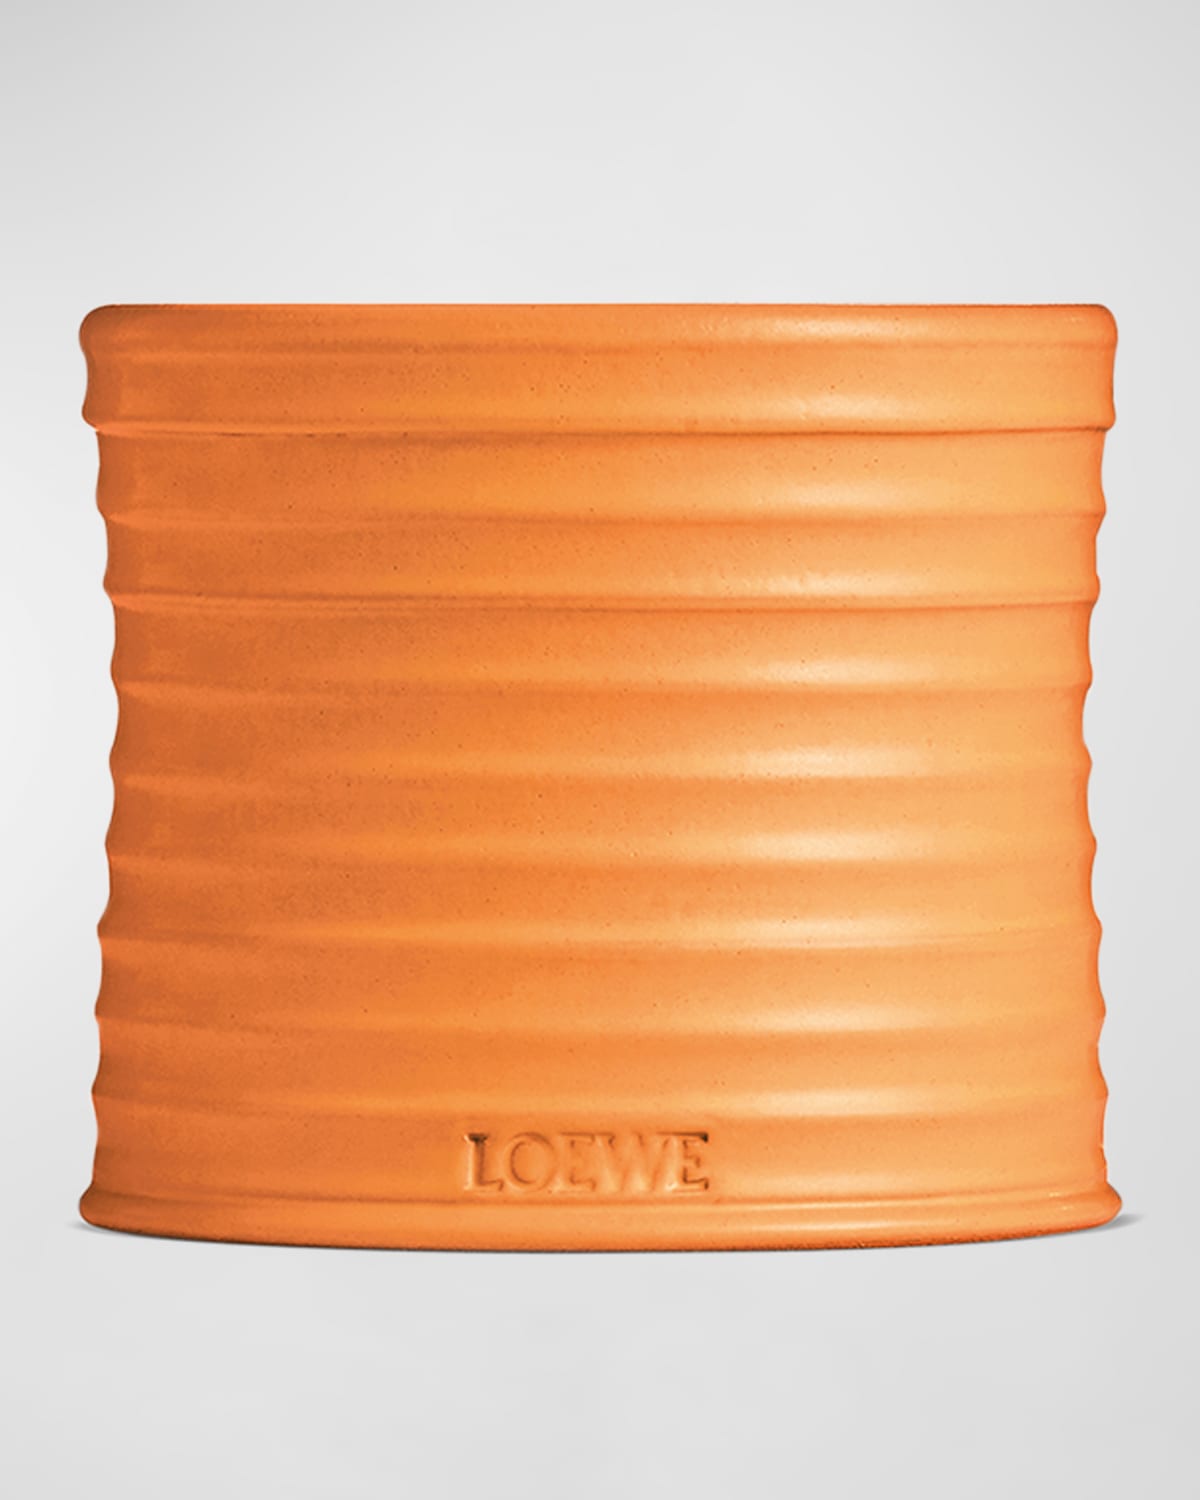 Loewe Orange Blossom Candle, 610 g